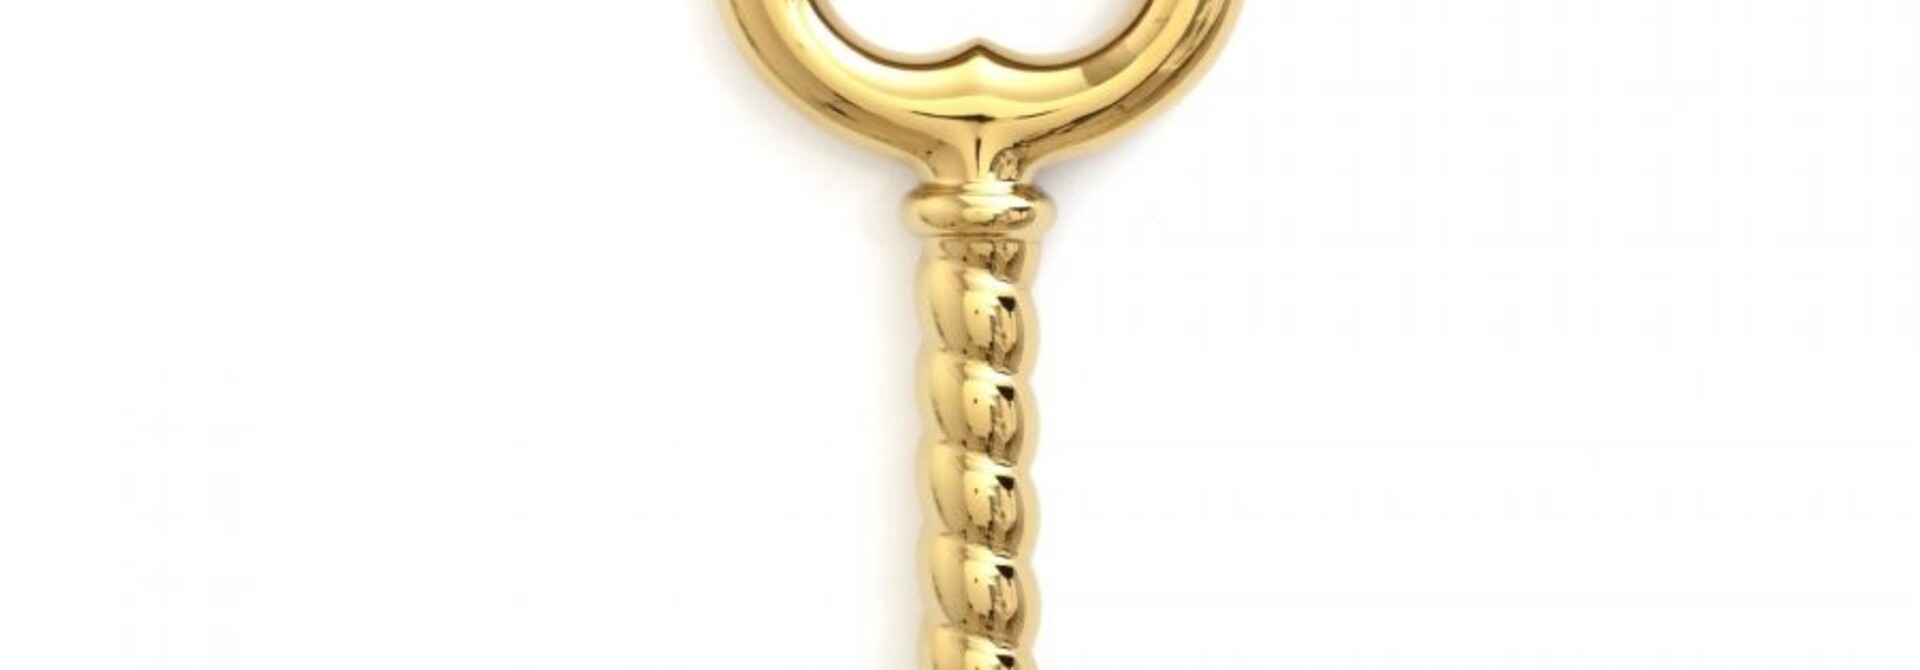 Golden key "Power key"